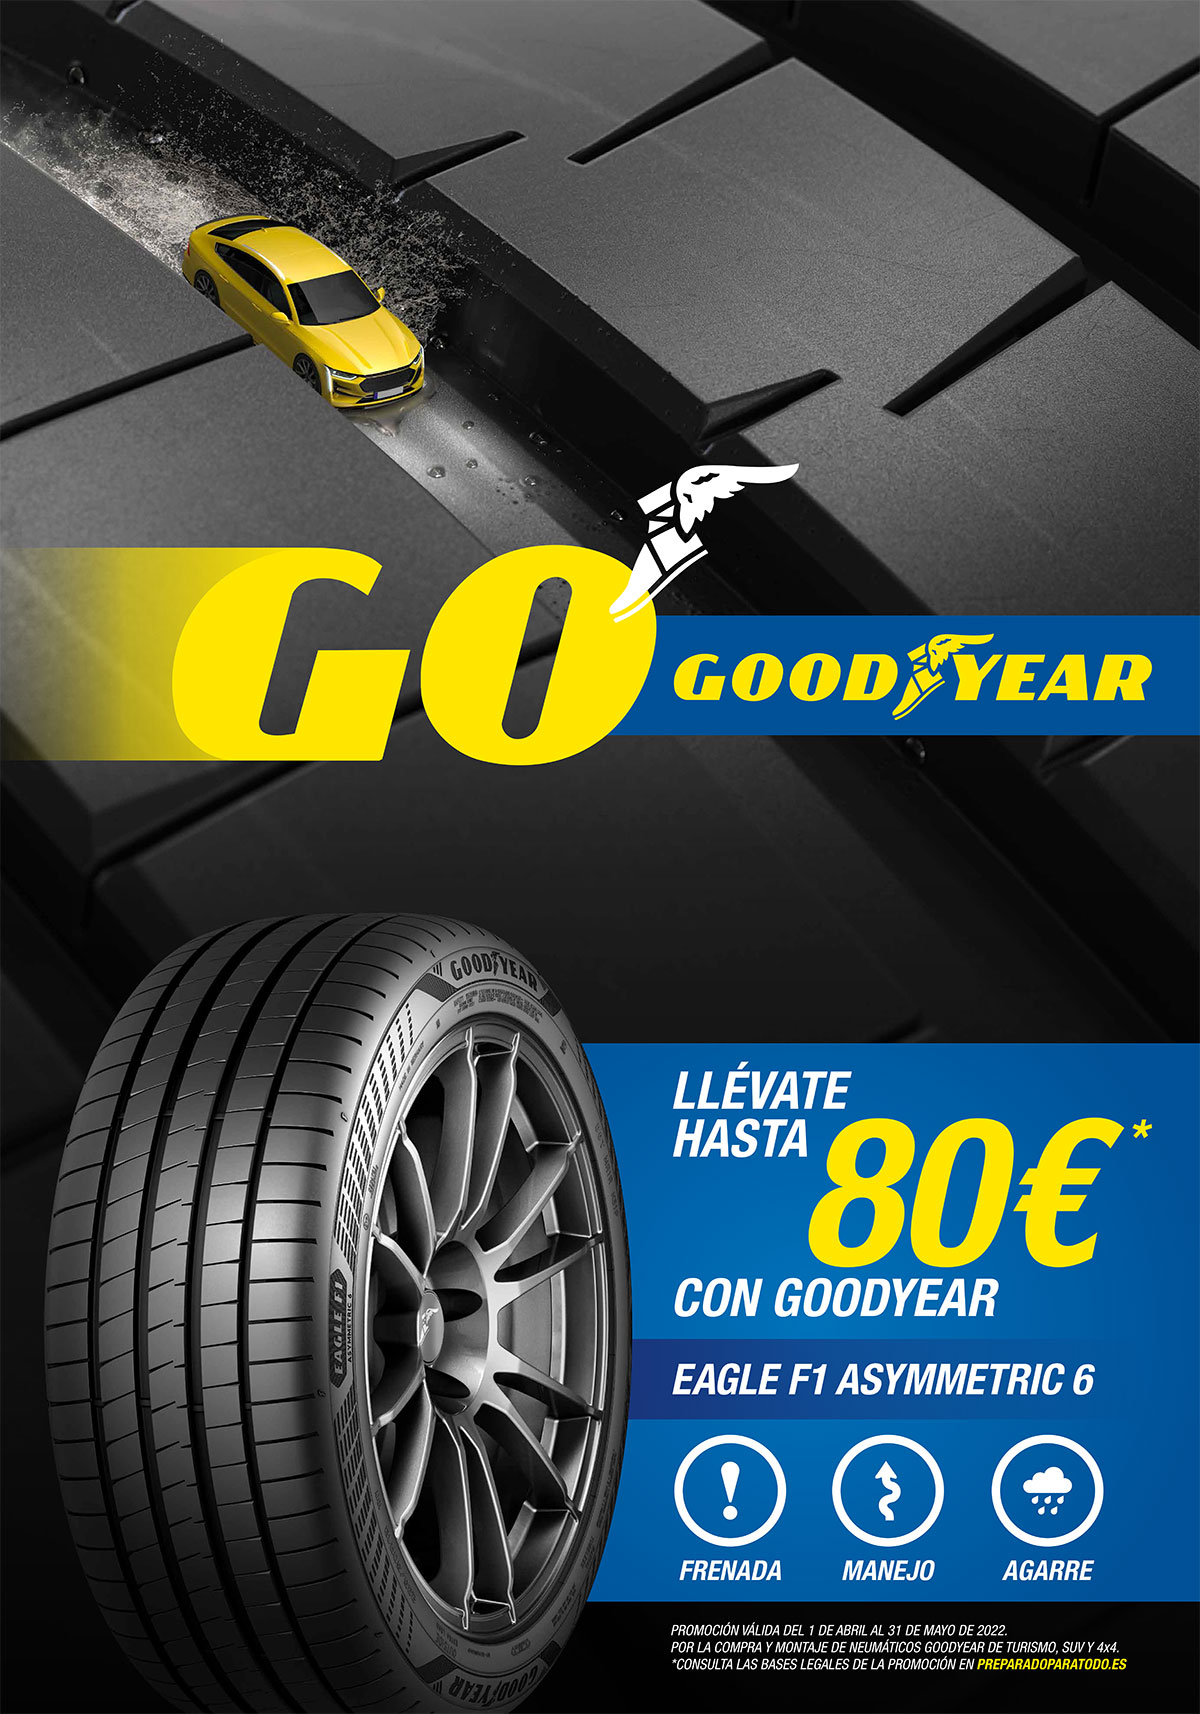 Llévate Hasta 80€ con Goodyear Eagle F1 Asymmetric 6